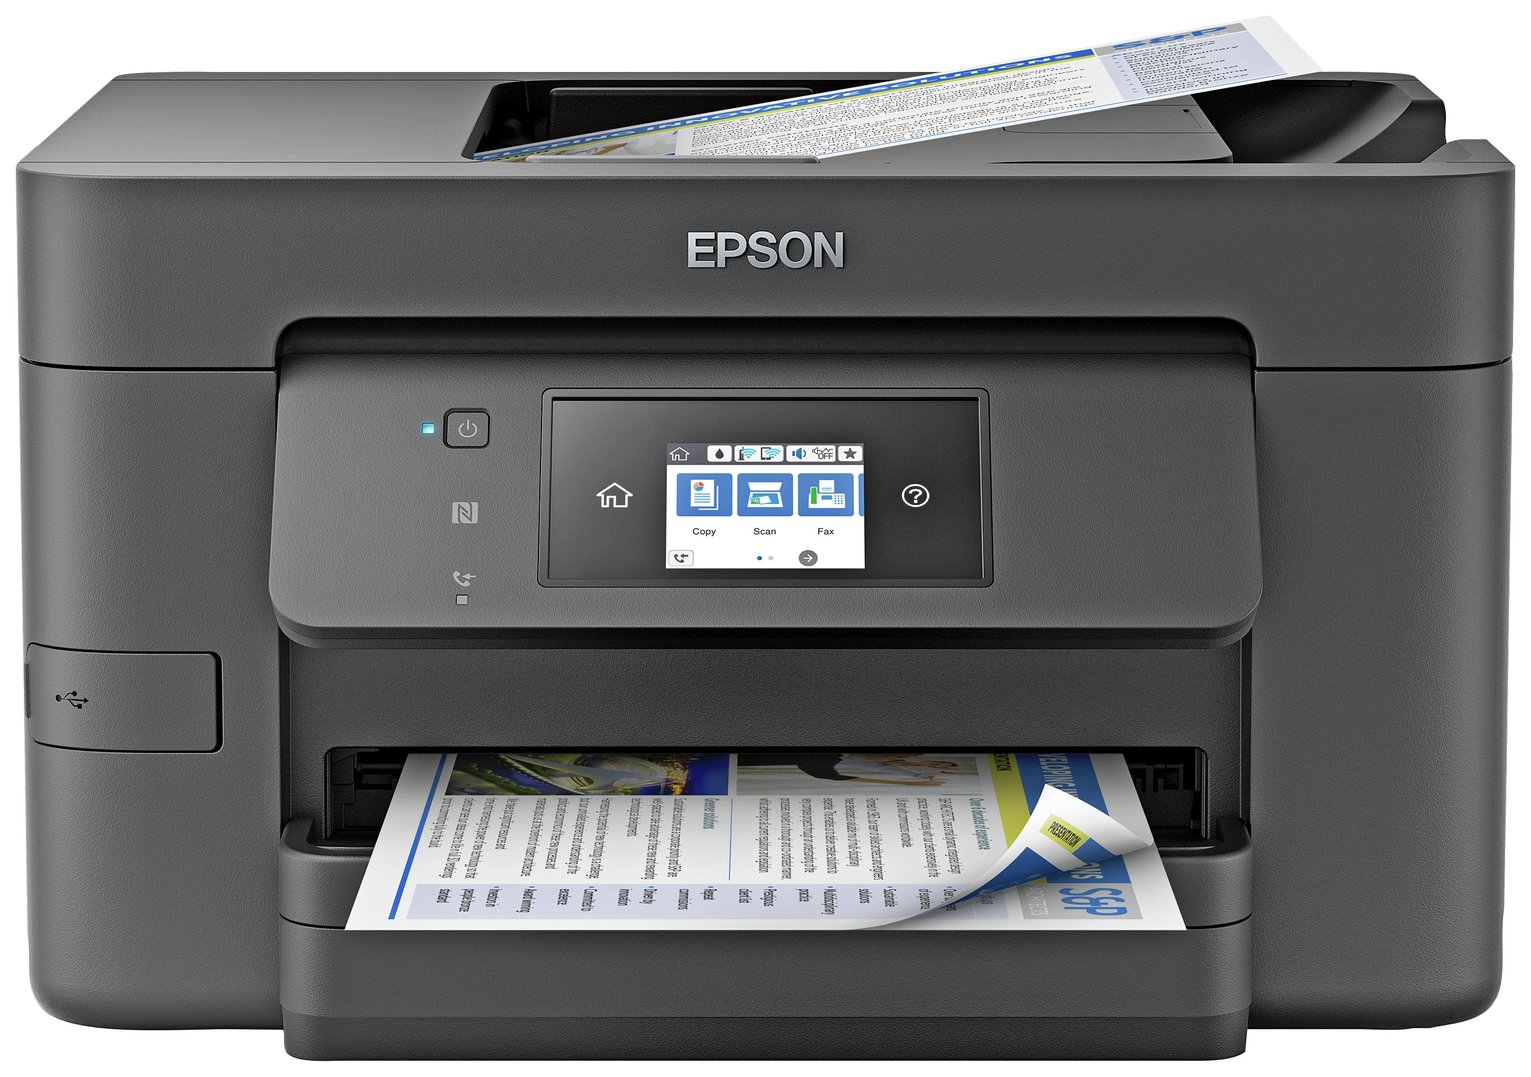 Epson Workforce Pro Wf 3720dwf Inkjet Printer Review 7961